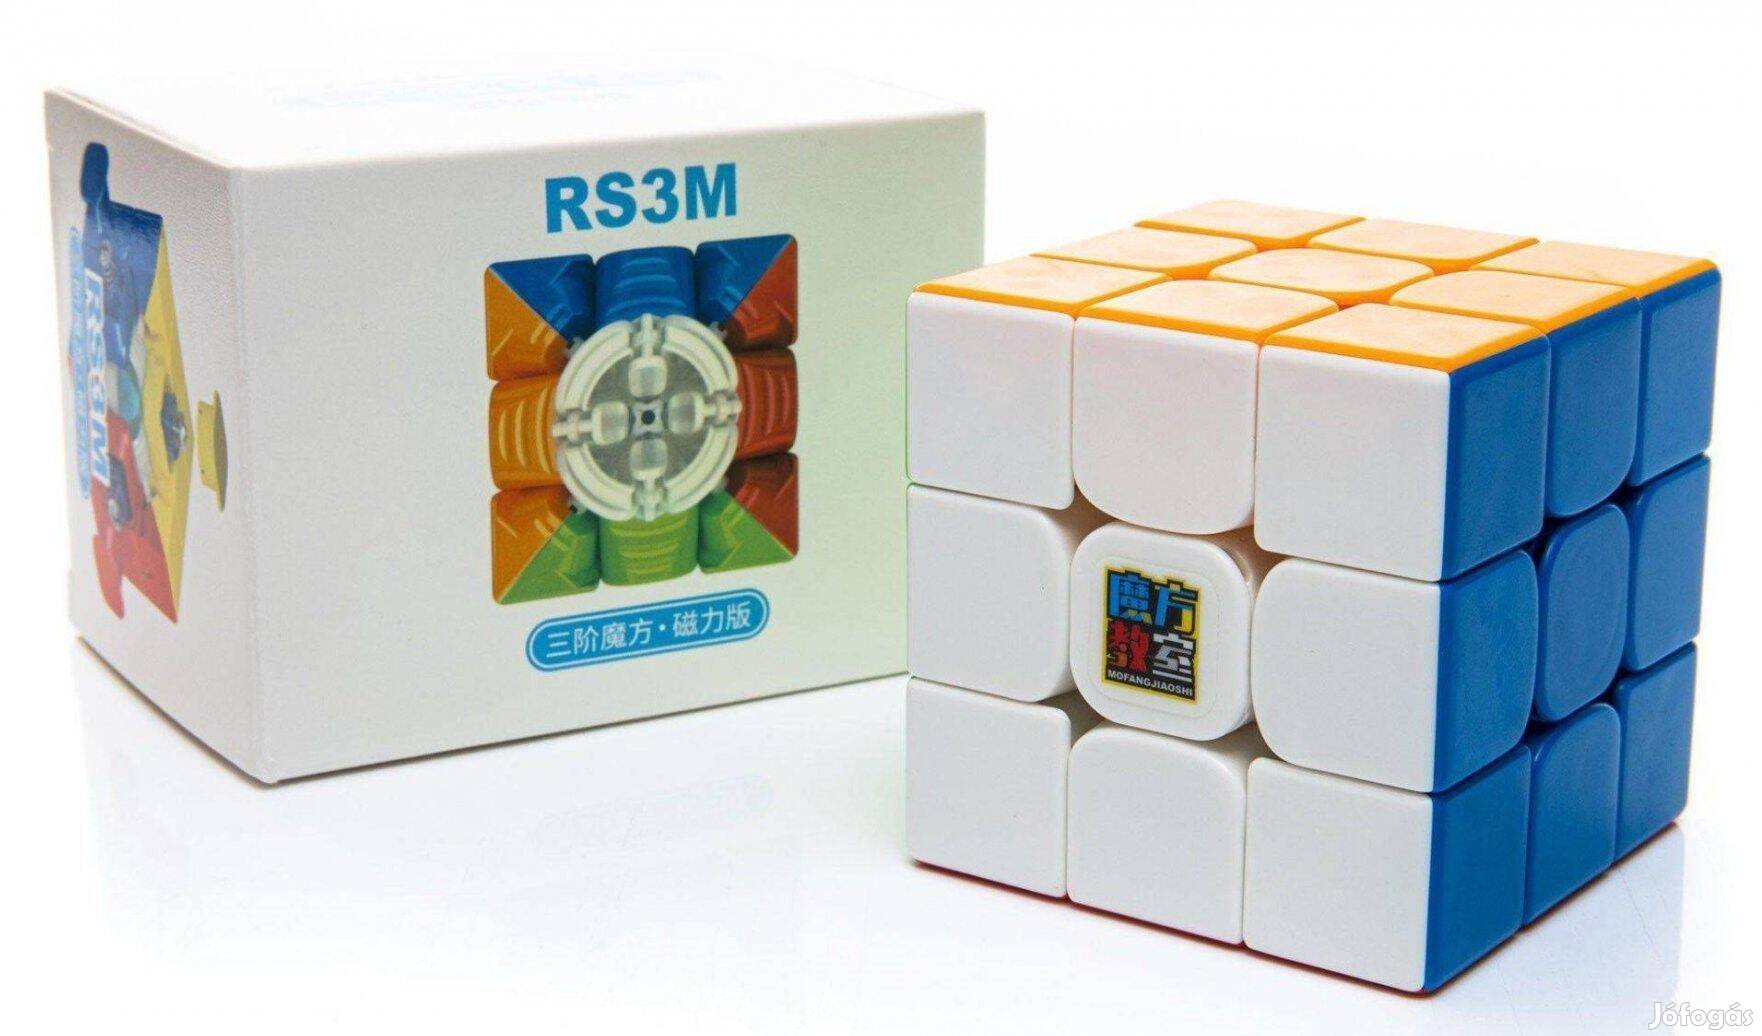 Moyu RS3M 2020 3x3-as (3x3) profi rubik mágneses kocka, új!